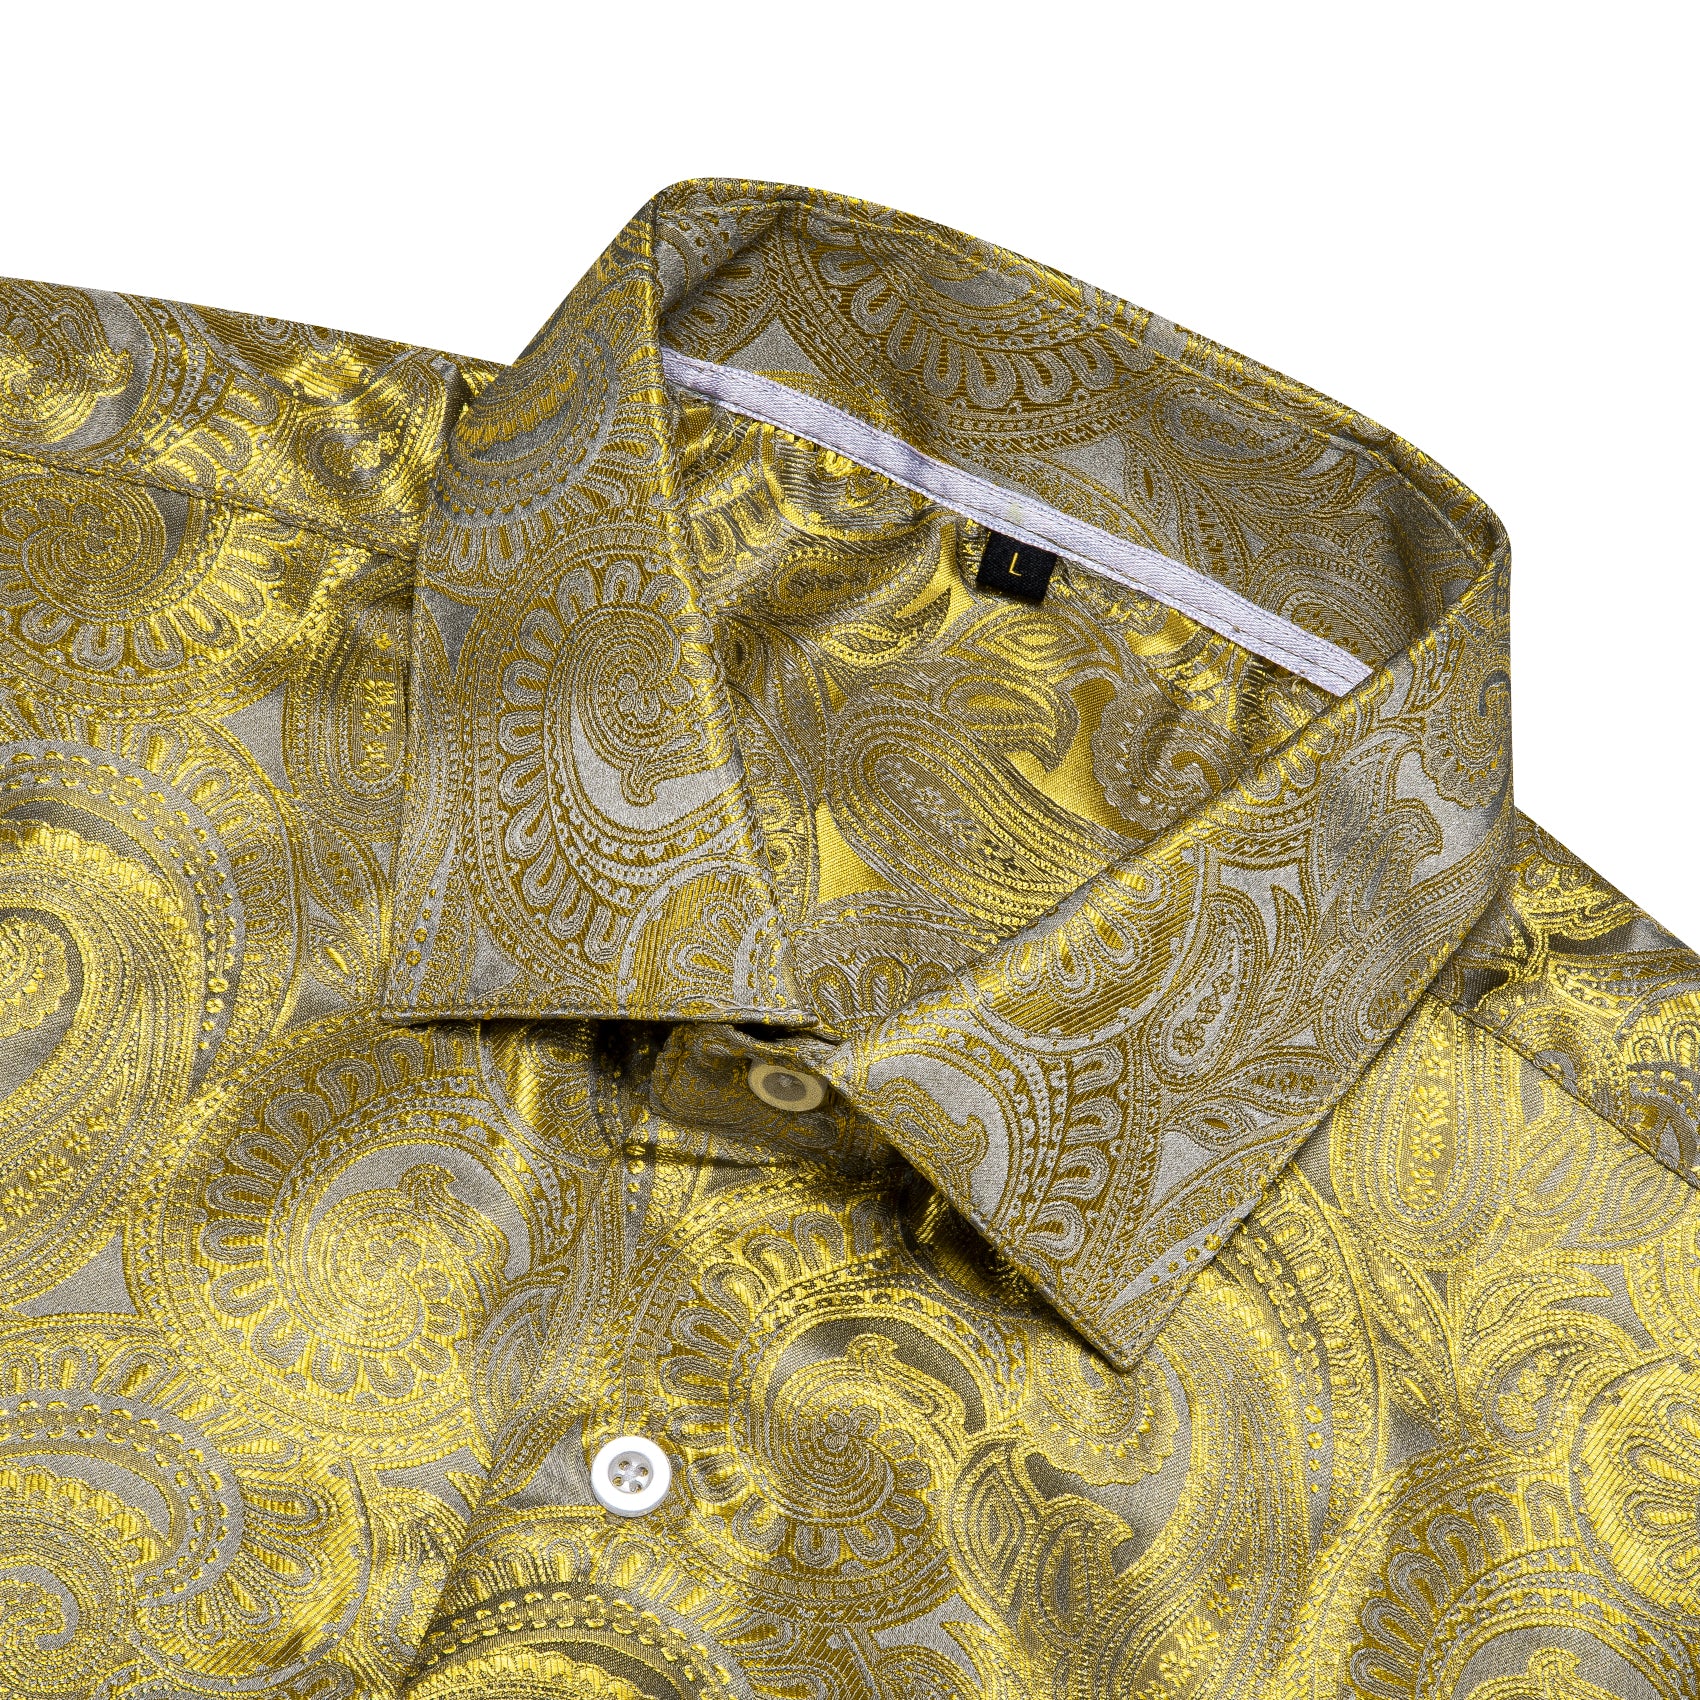 Barry.wang Luxury Gold Paisley Silk Men's Shirt